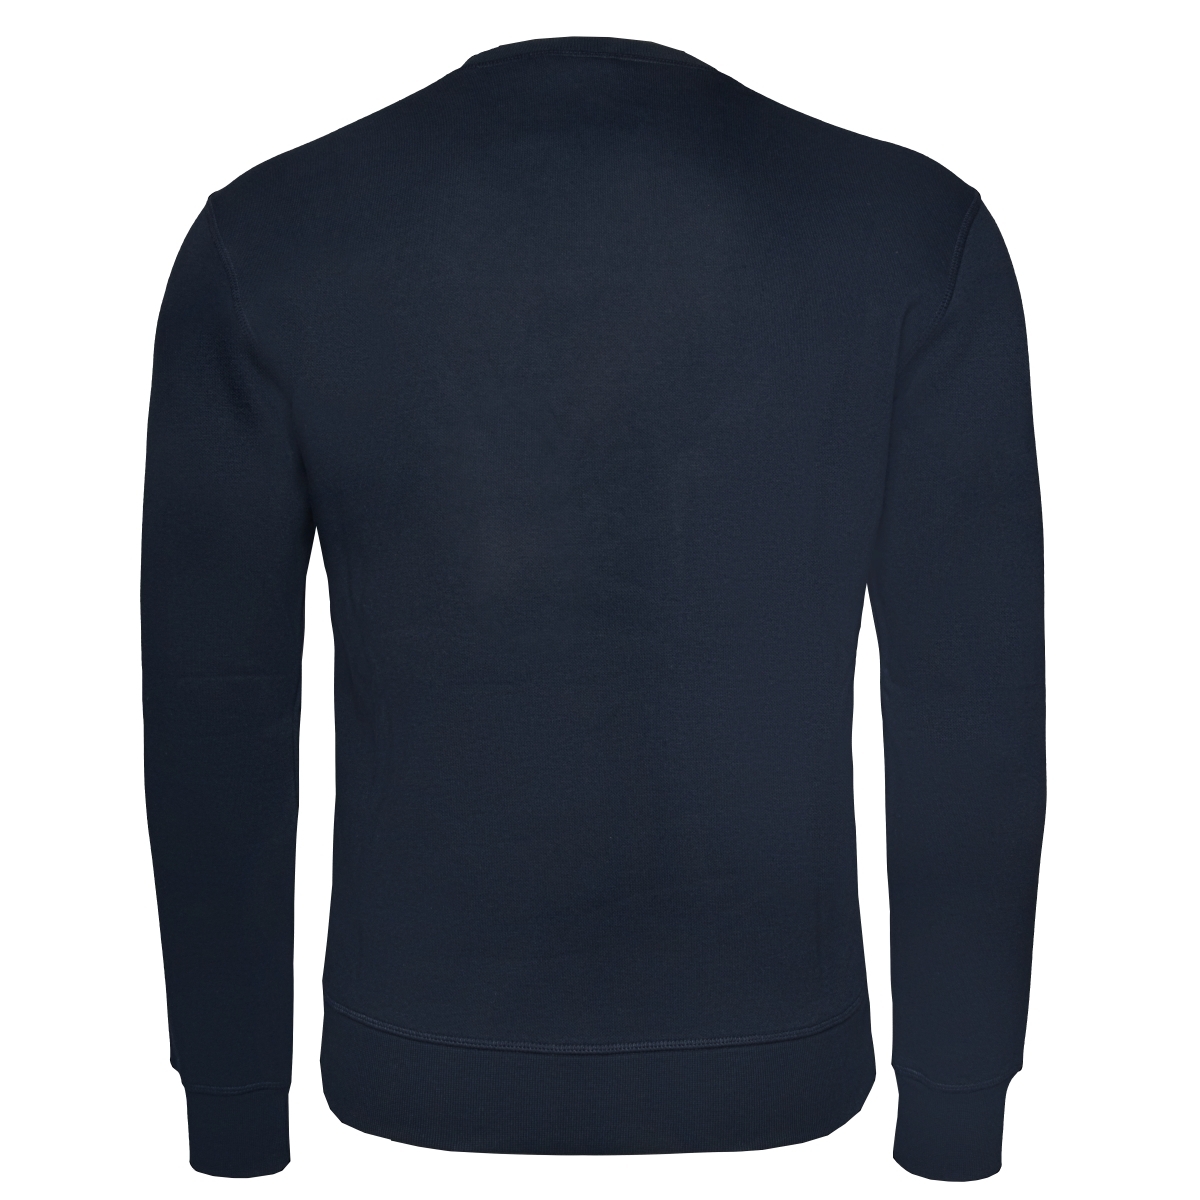 Champion Crewneck Sweatshirt blau